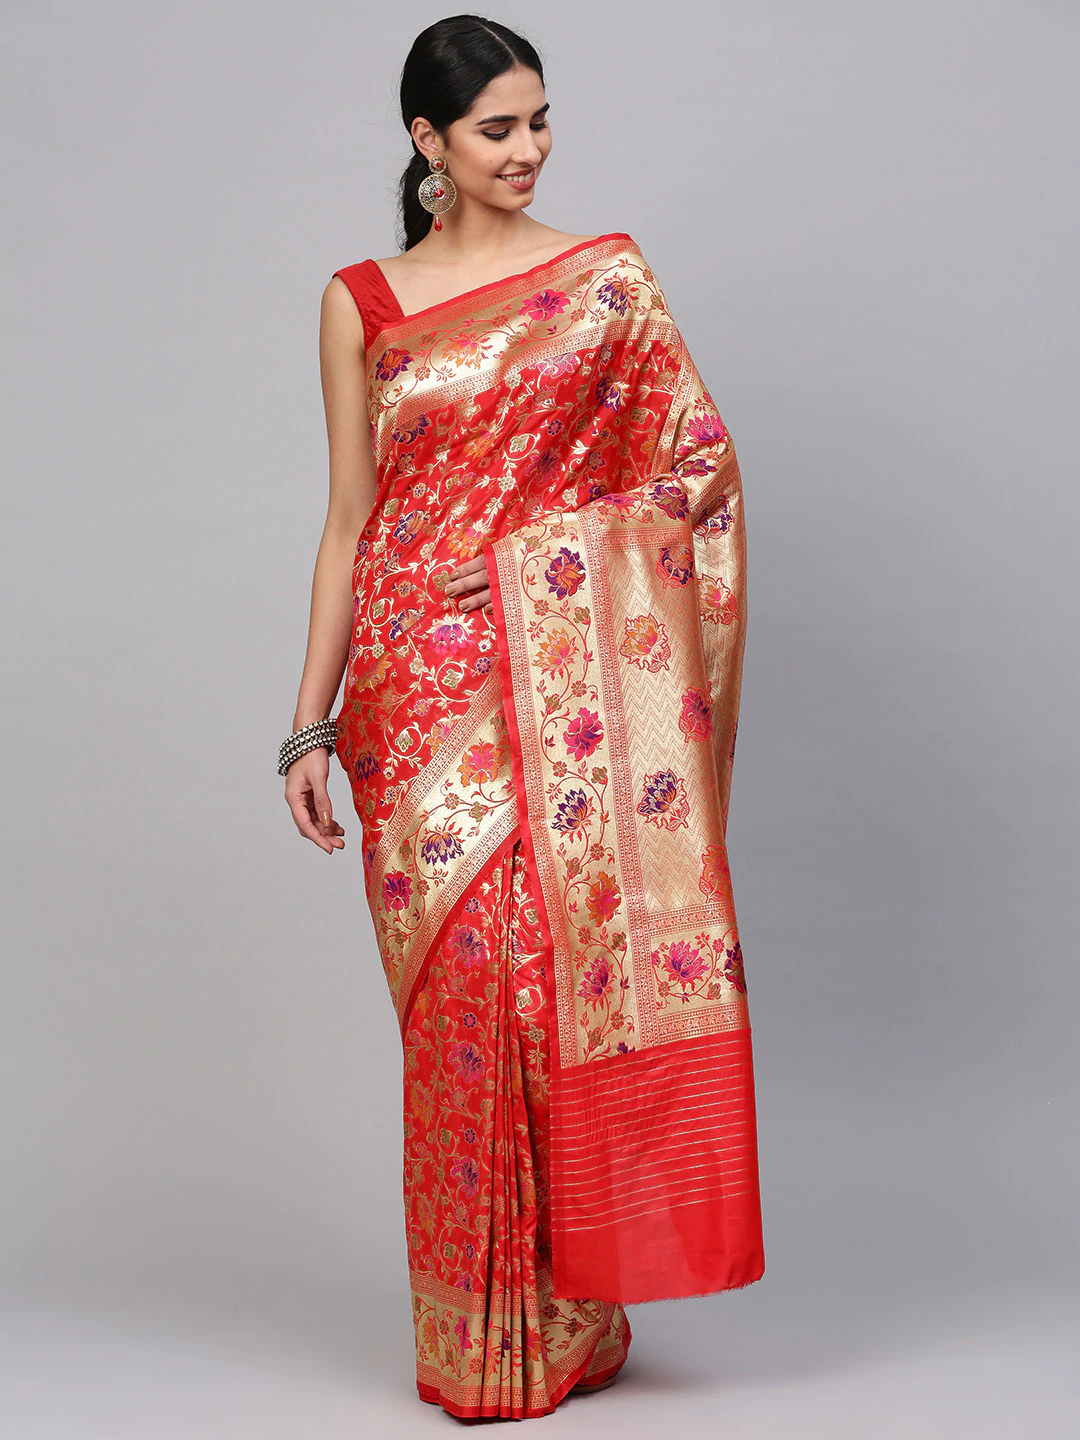 Banarasi Silk Saree with Handloom Meenakari Floral Pattern